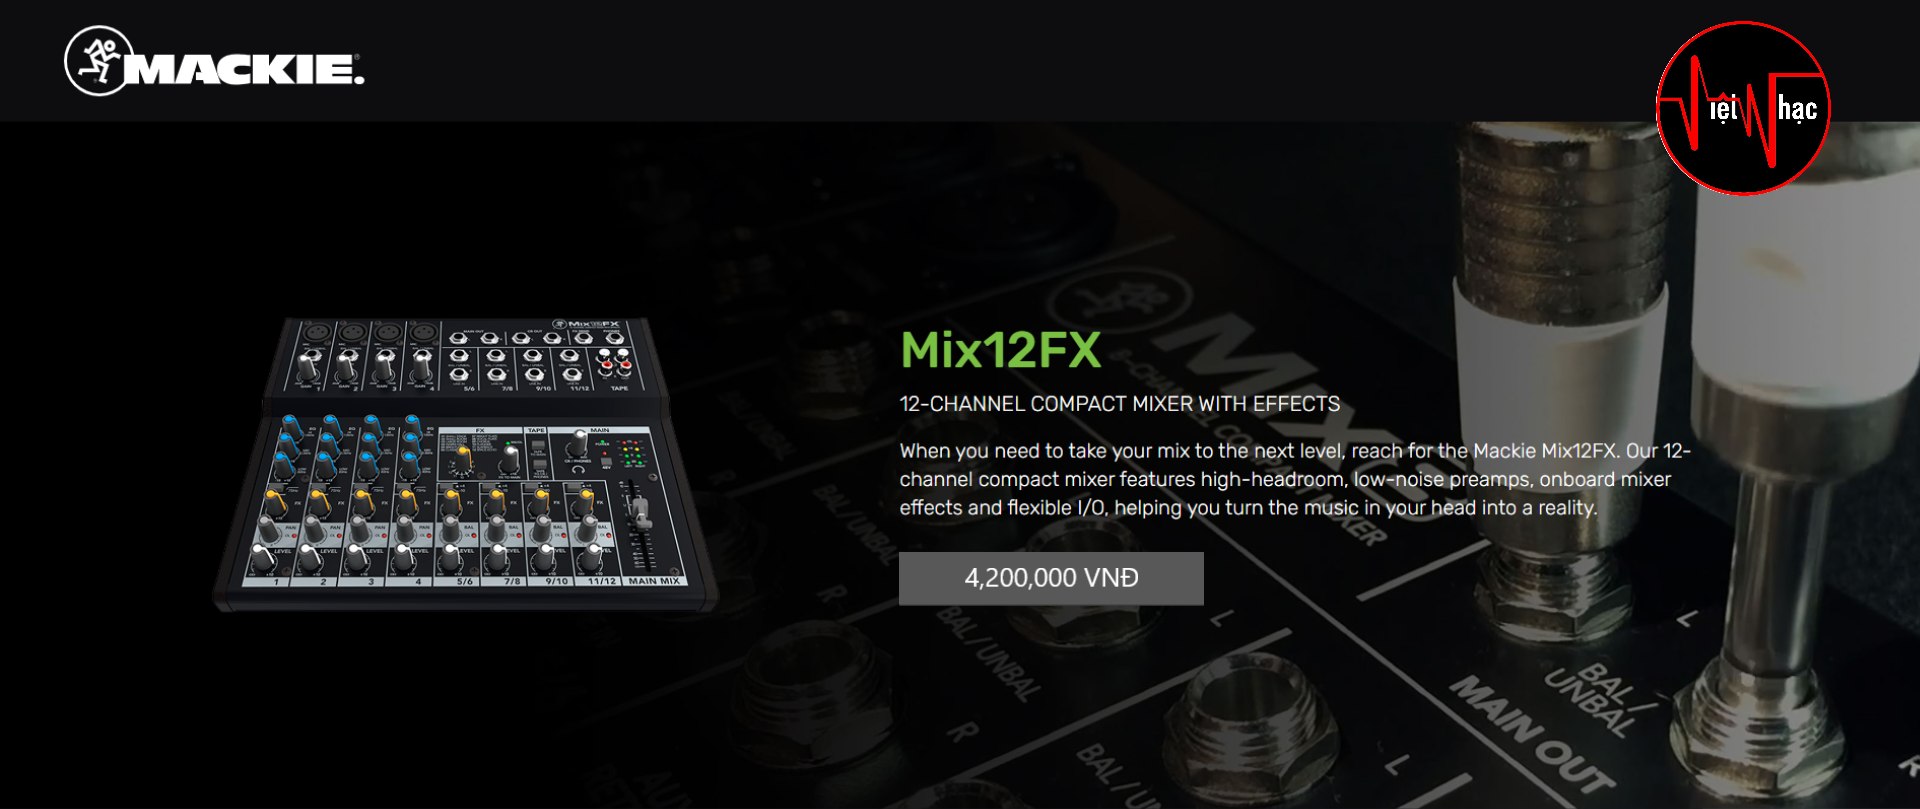 Mixer Mackie MIX 12FX